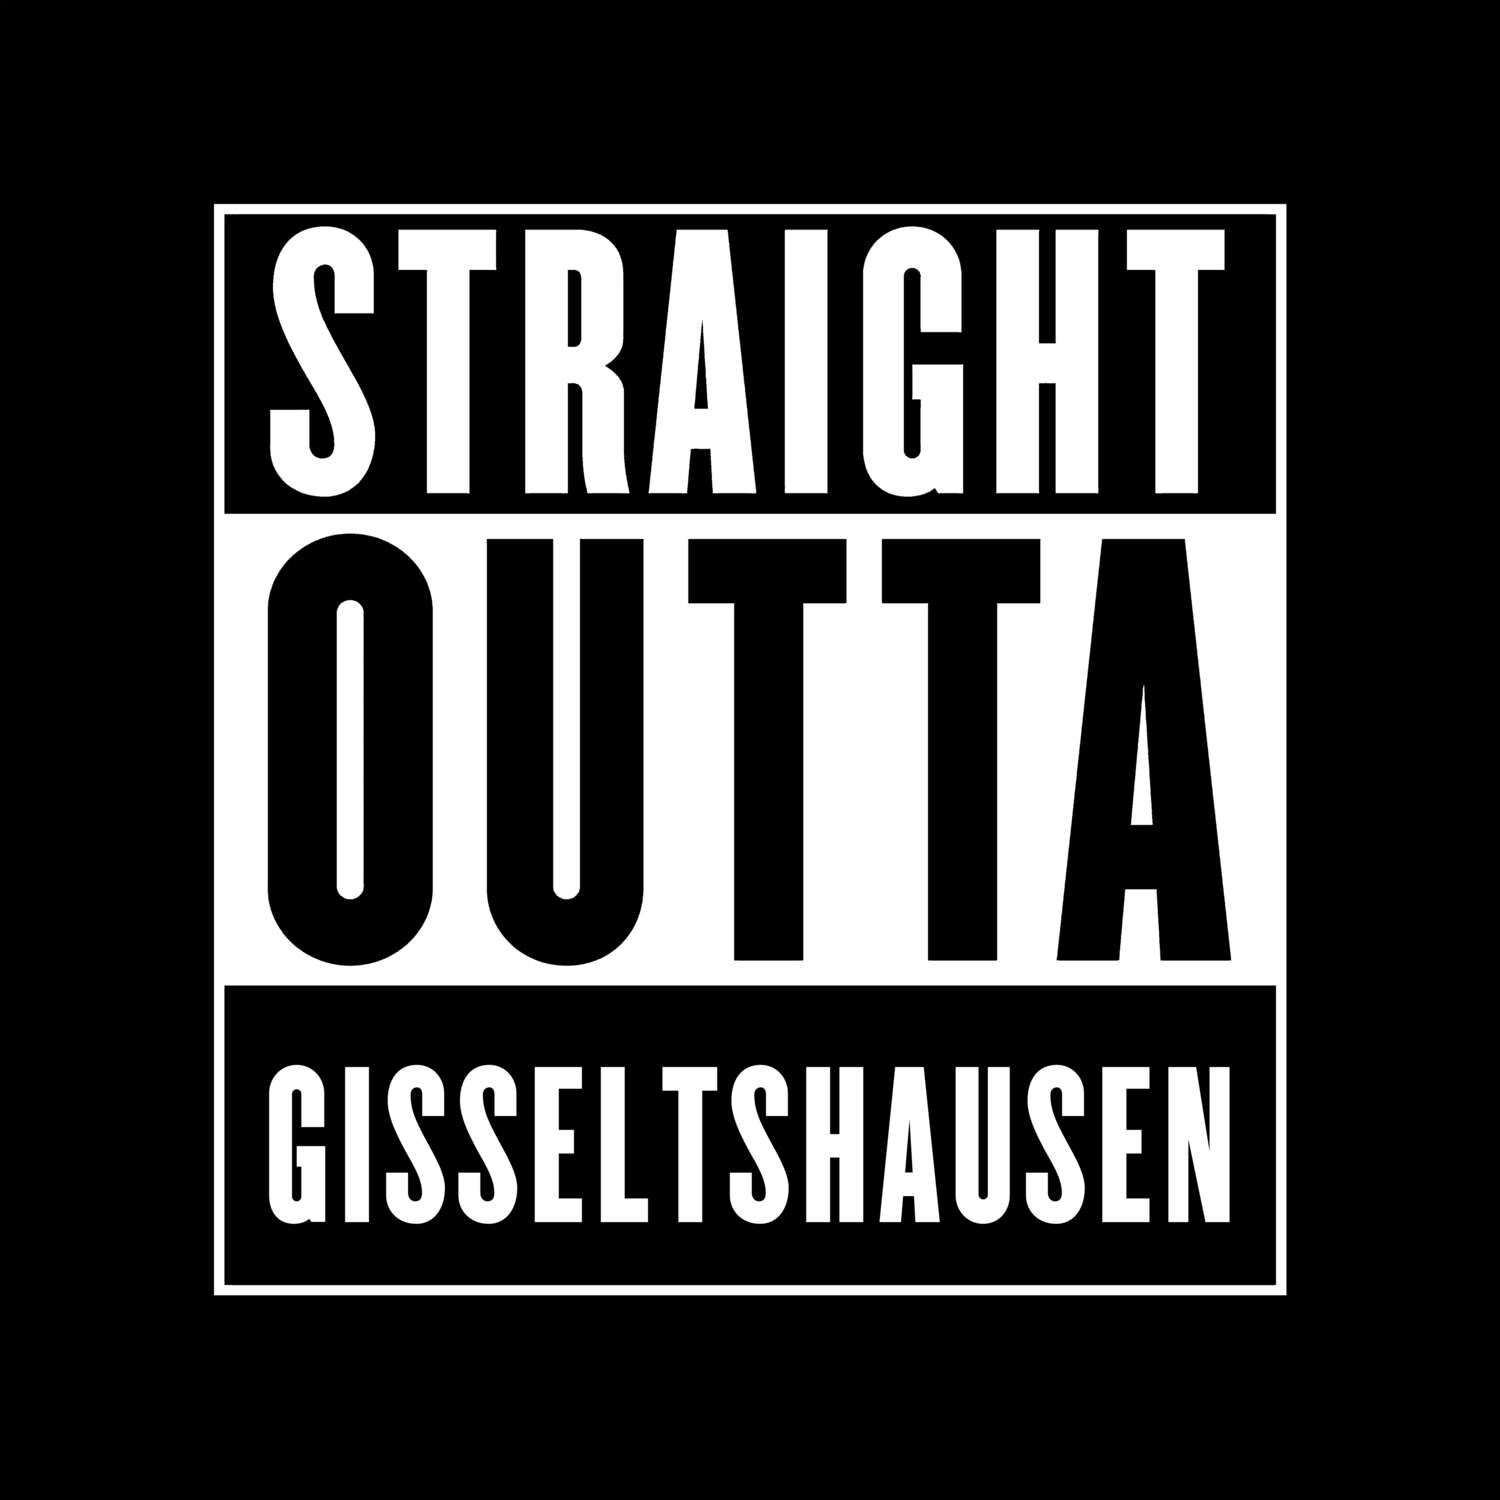 Gisseltshausen T-Shirt »Straight Outta«